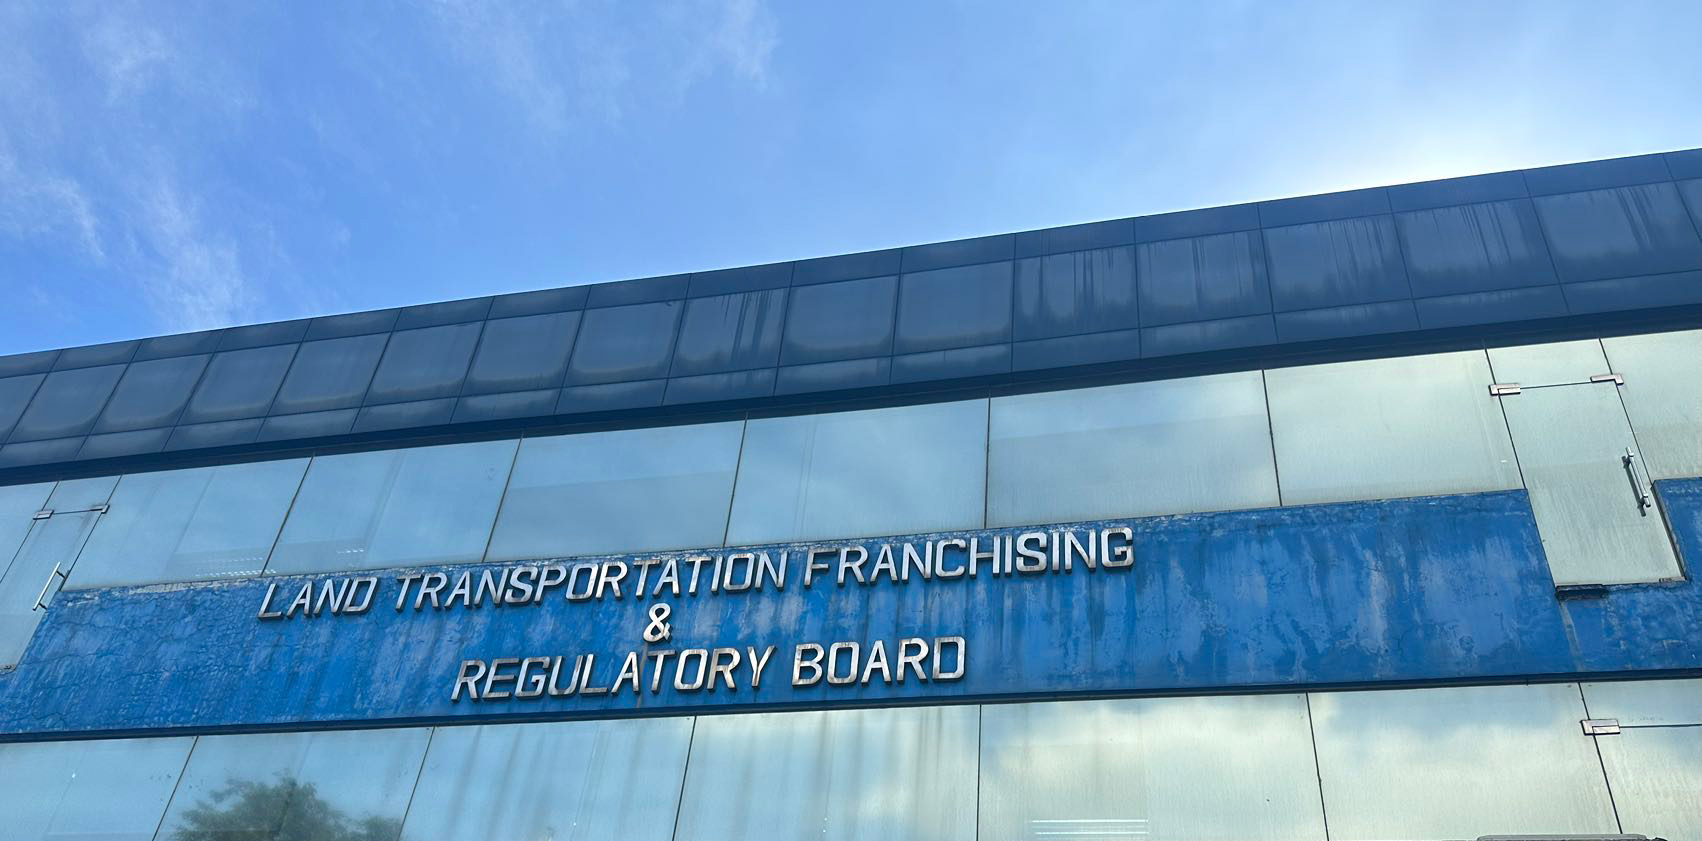 Land-transport-Franchising & Regulatory-Board